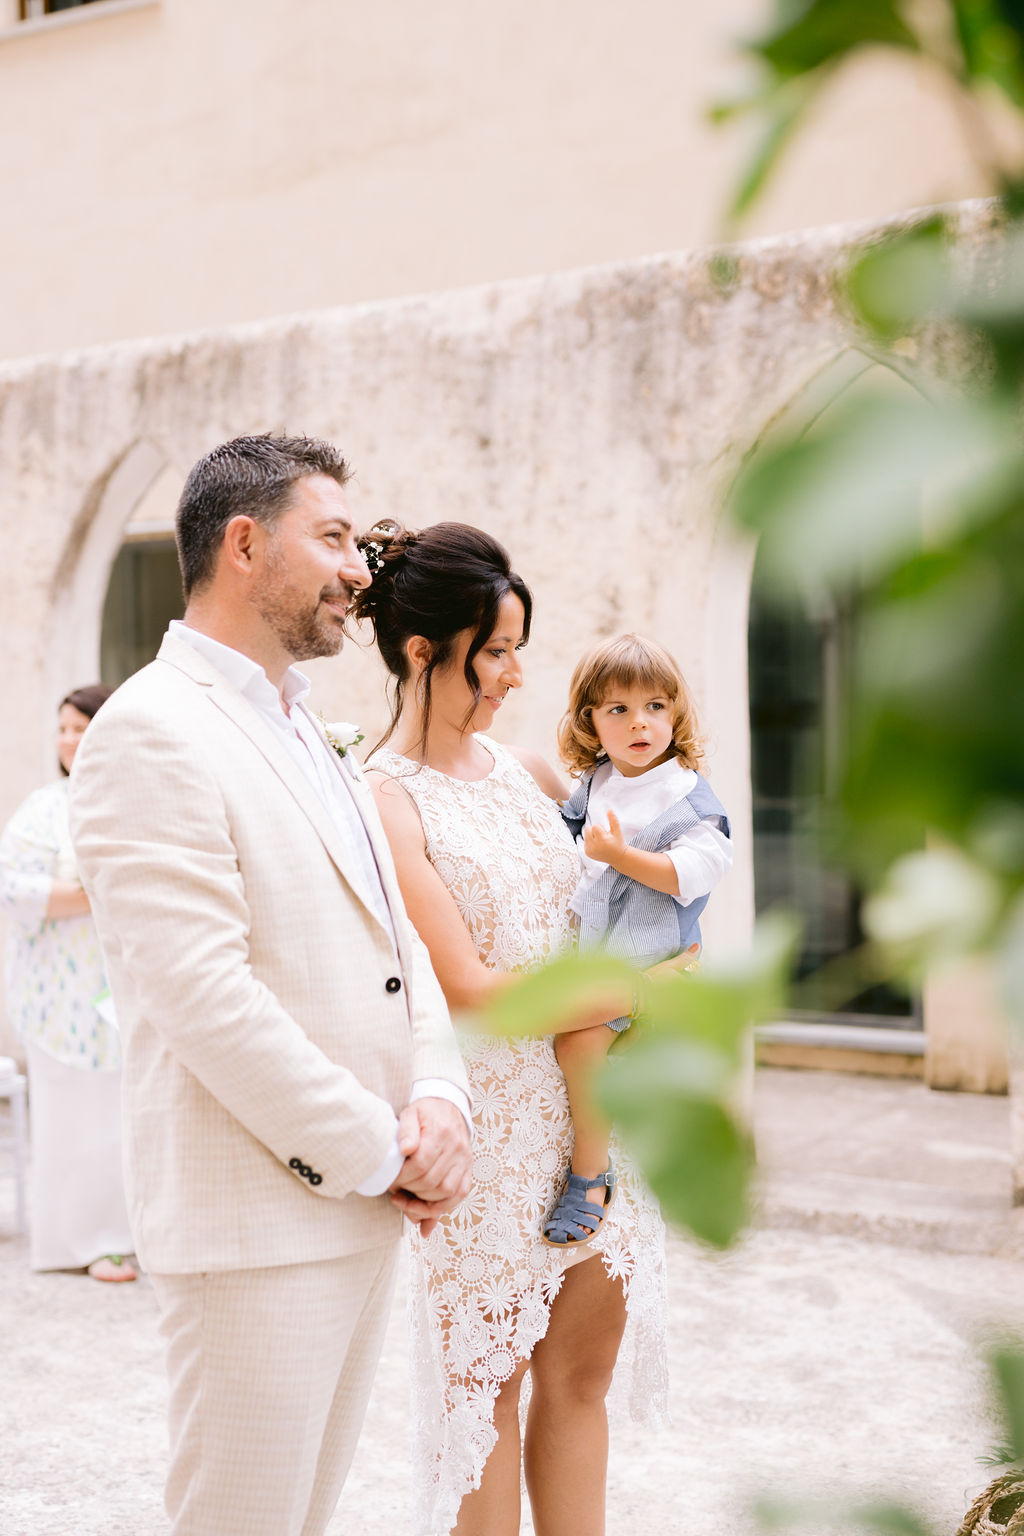 Andrea and Monica wedding at Nh Amalfi (10)